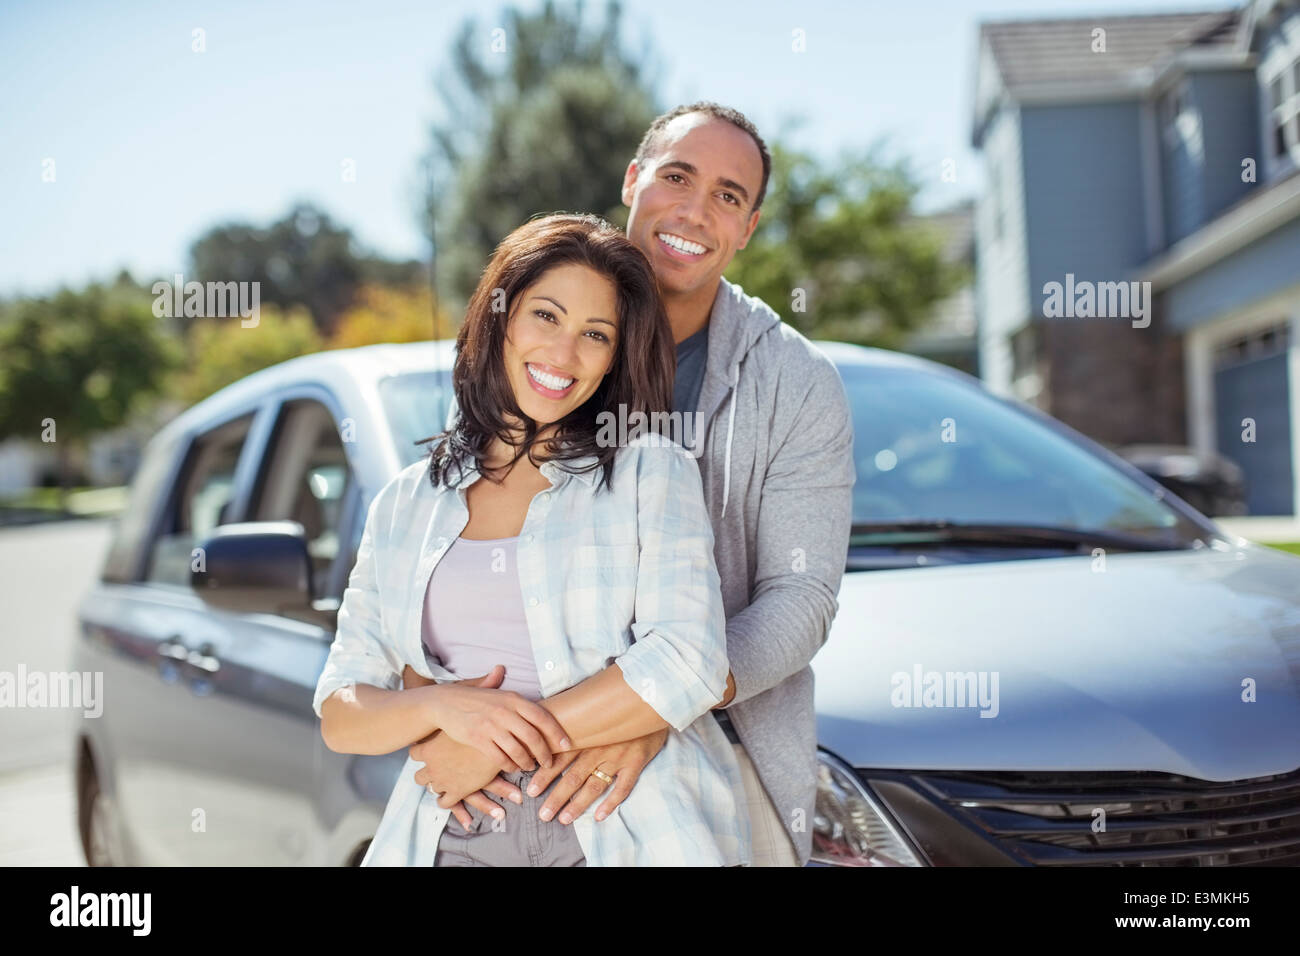 Portrait of smiling couple in driveway Banque D'Images